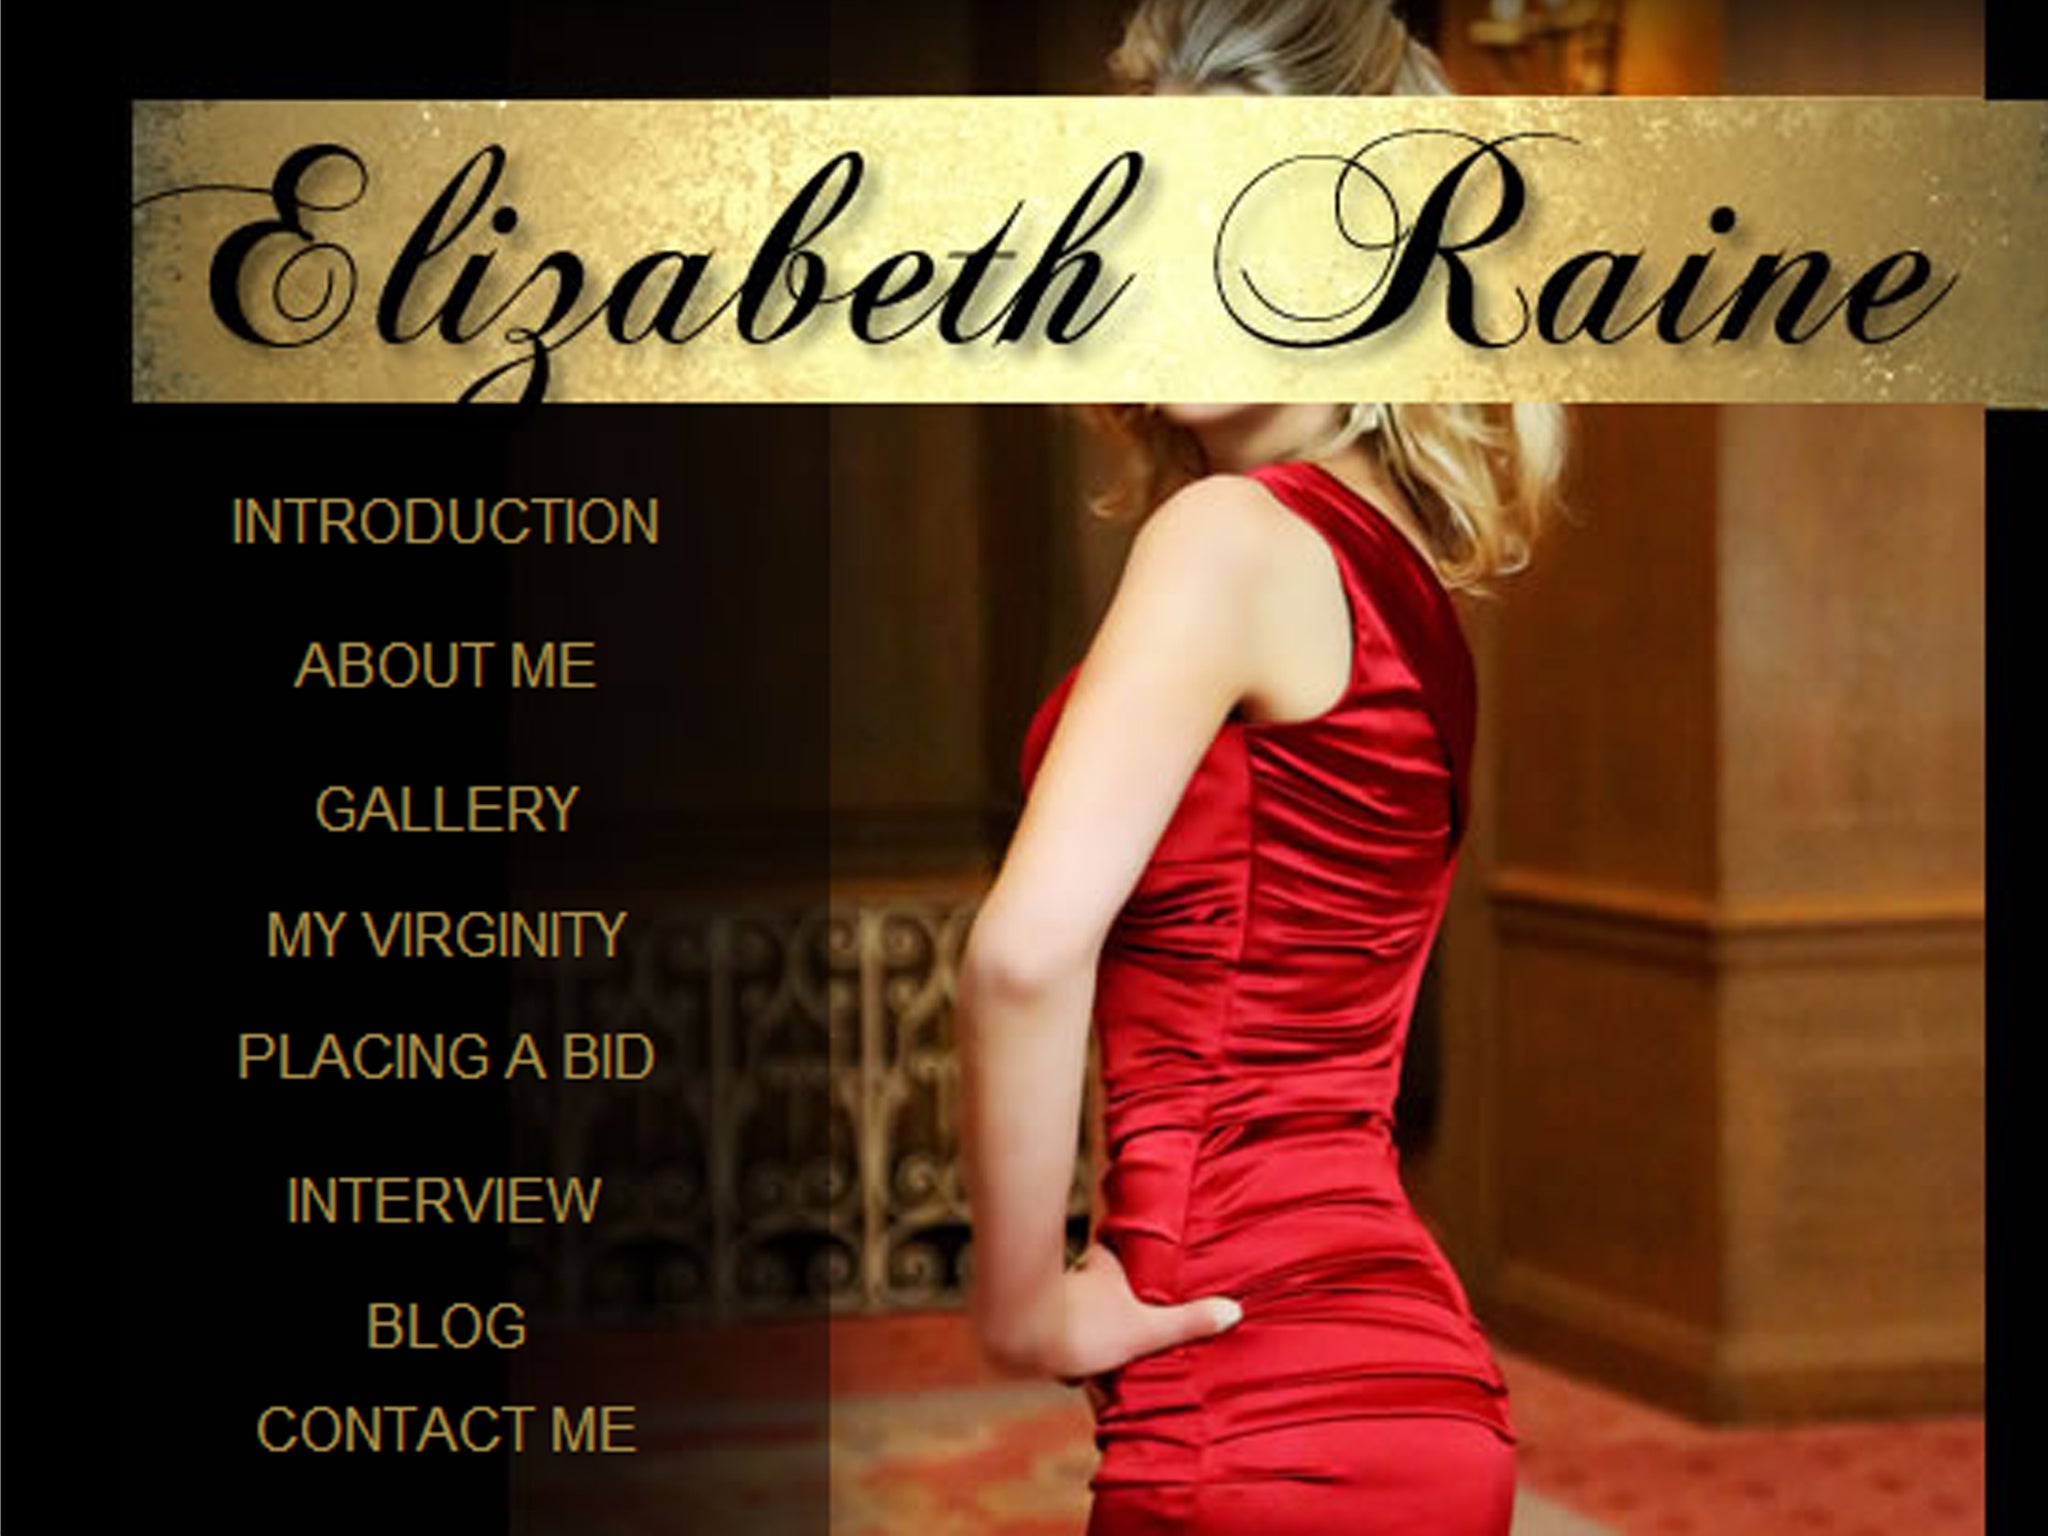 Elizabeth Raine is offering to auction her virginity